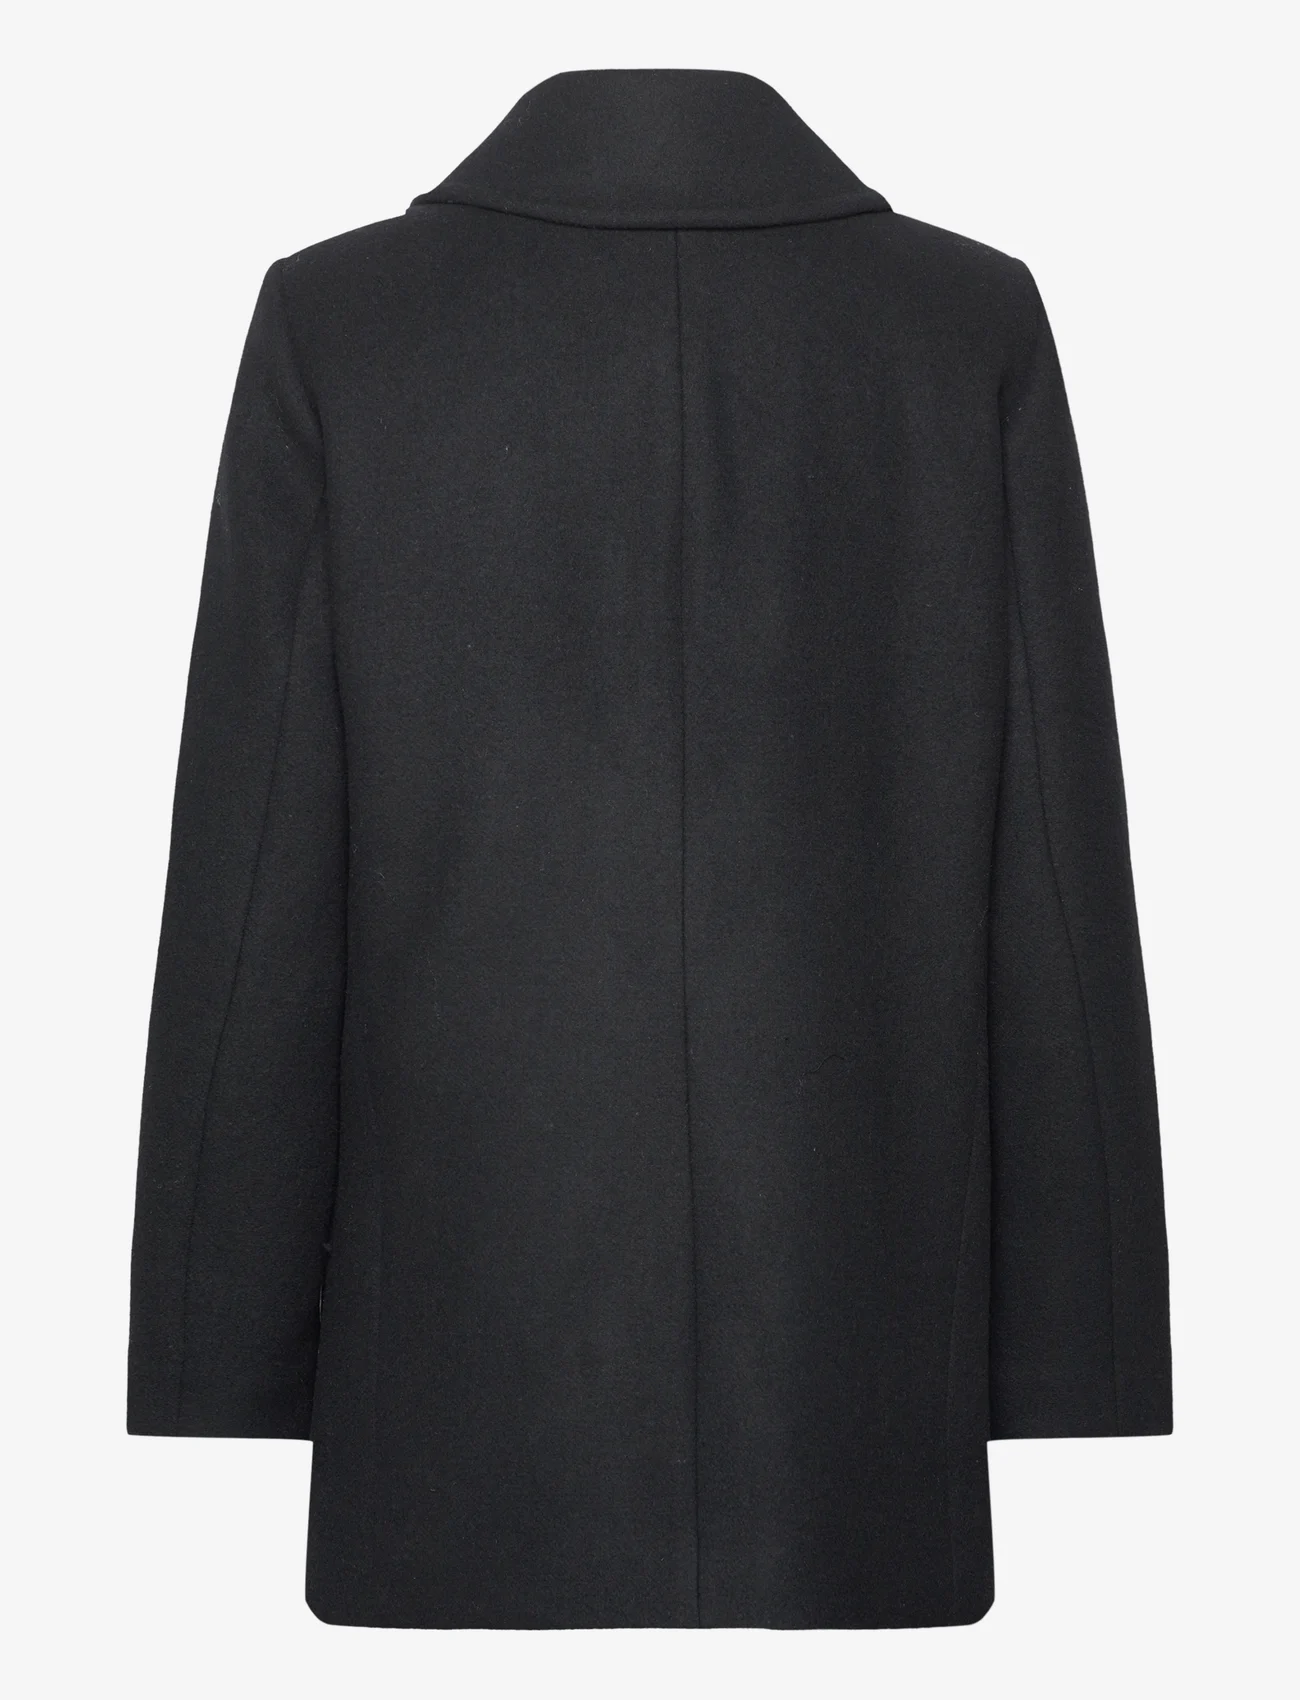 InWear - PerryIW Sailor Coat - winter coats - black - 1